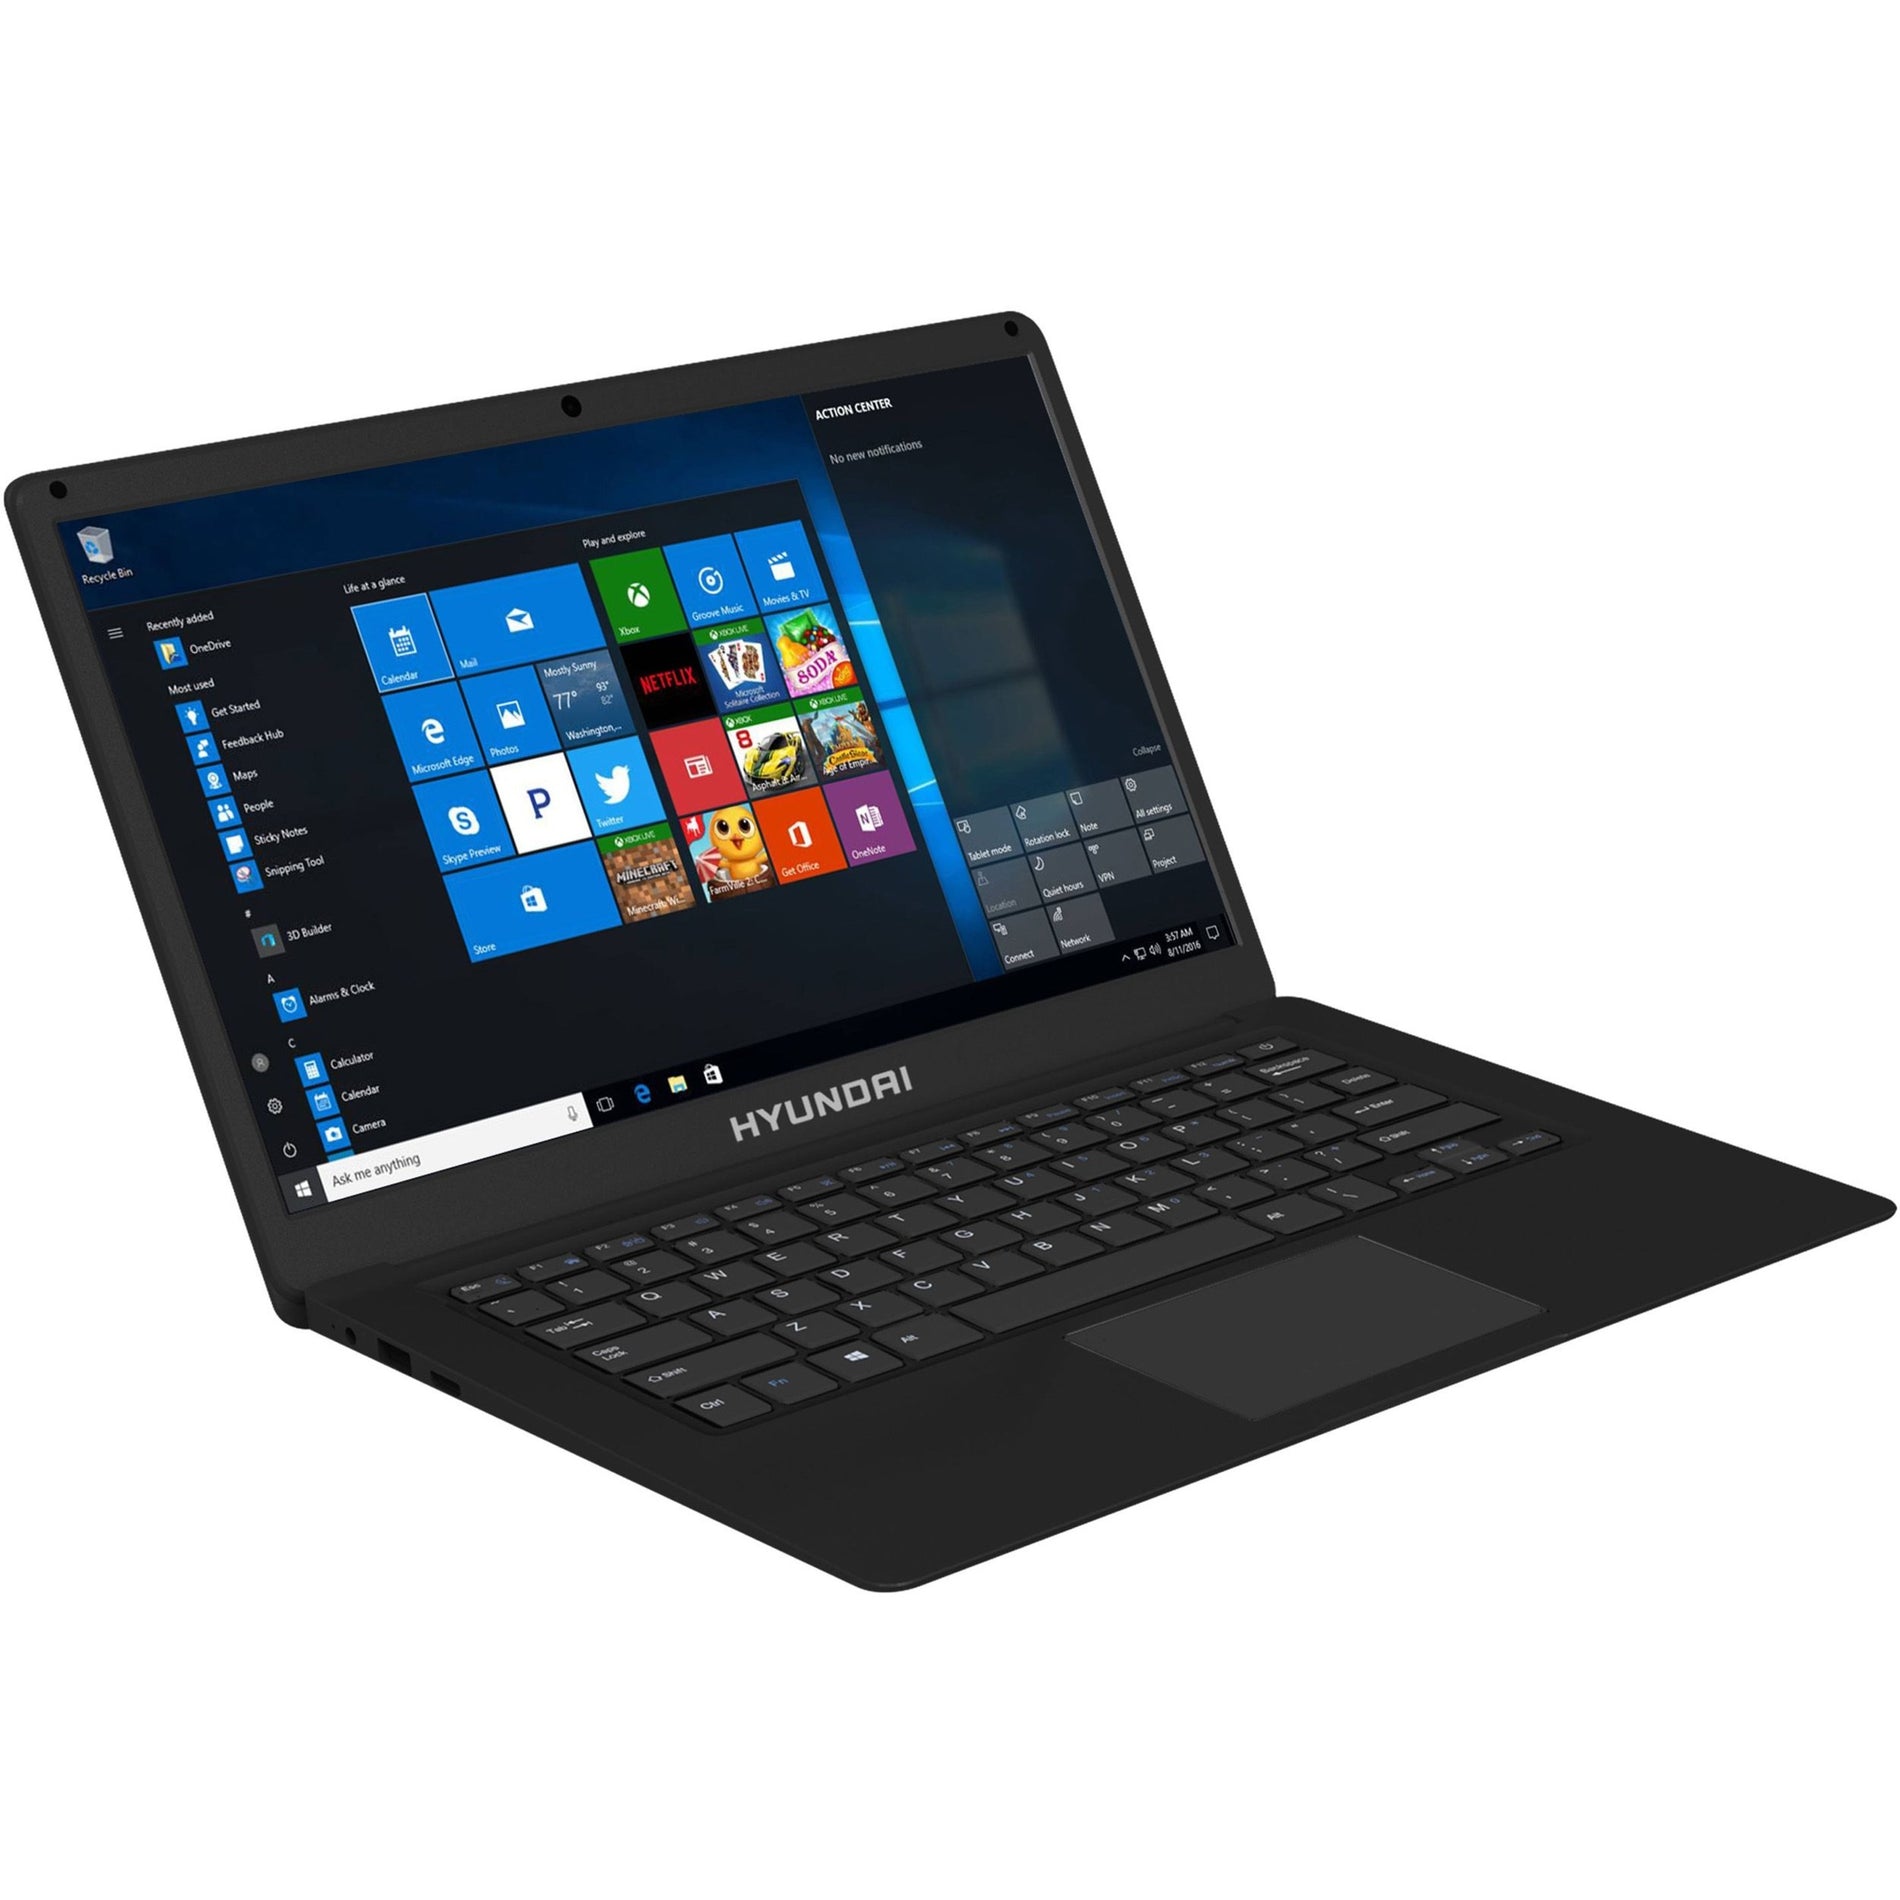 Hyundai L14WB1EBK Thinnote-A Notebook, 14.1" Celeron Laptop, 4GB RAM, 64GB Storage, Windows 10 Pro